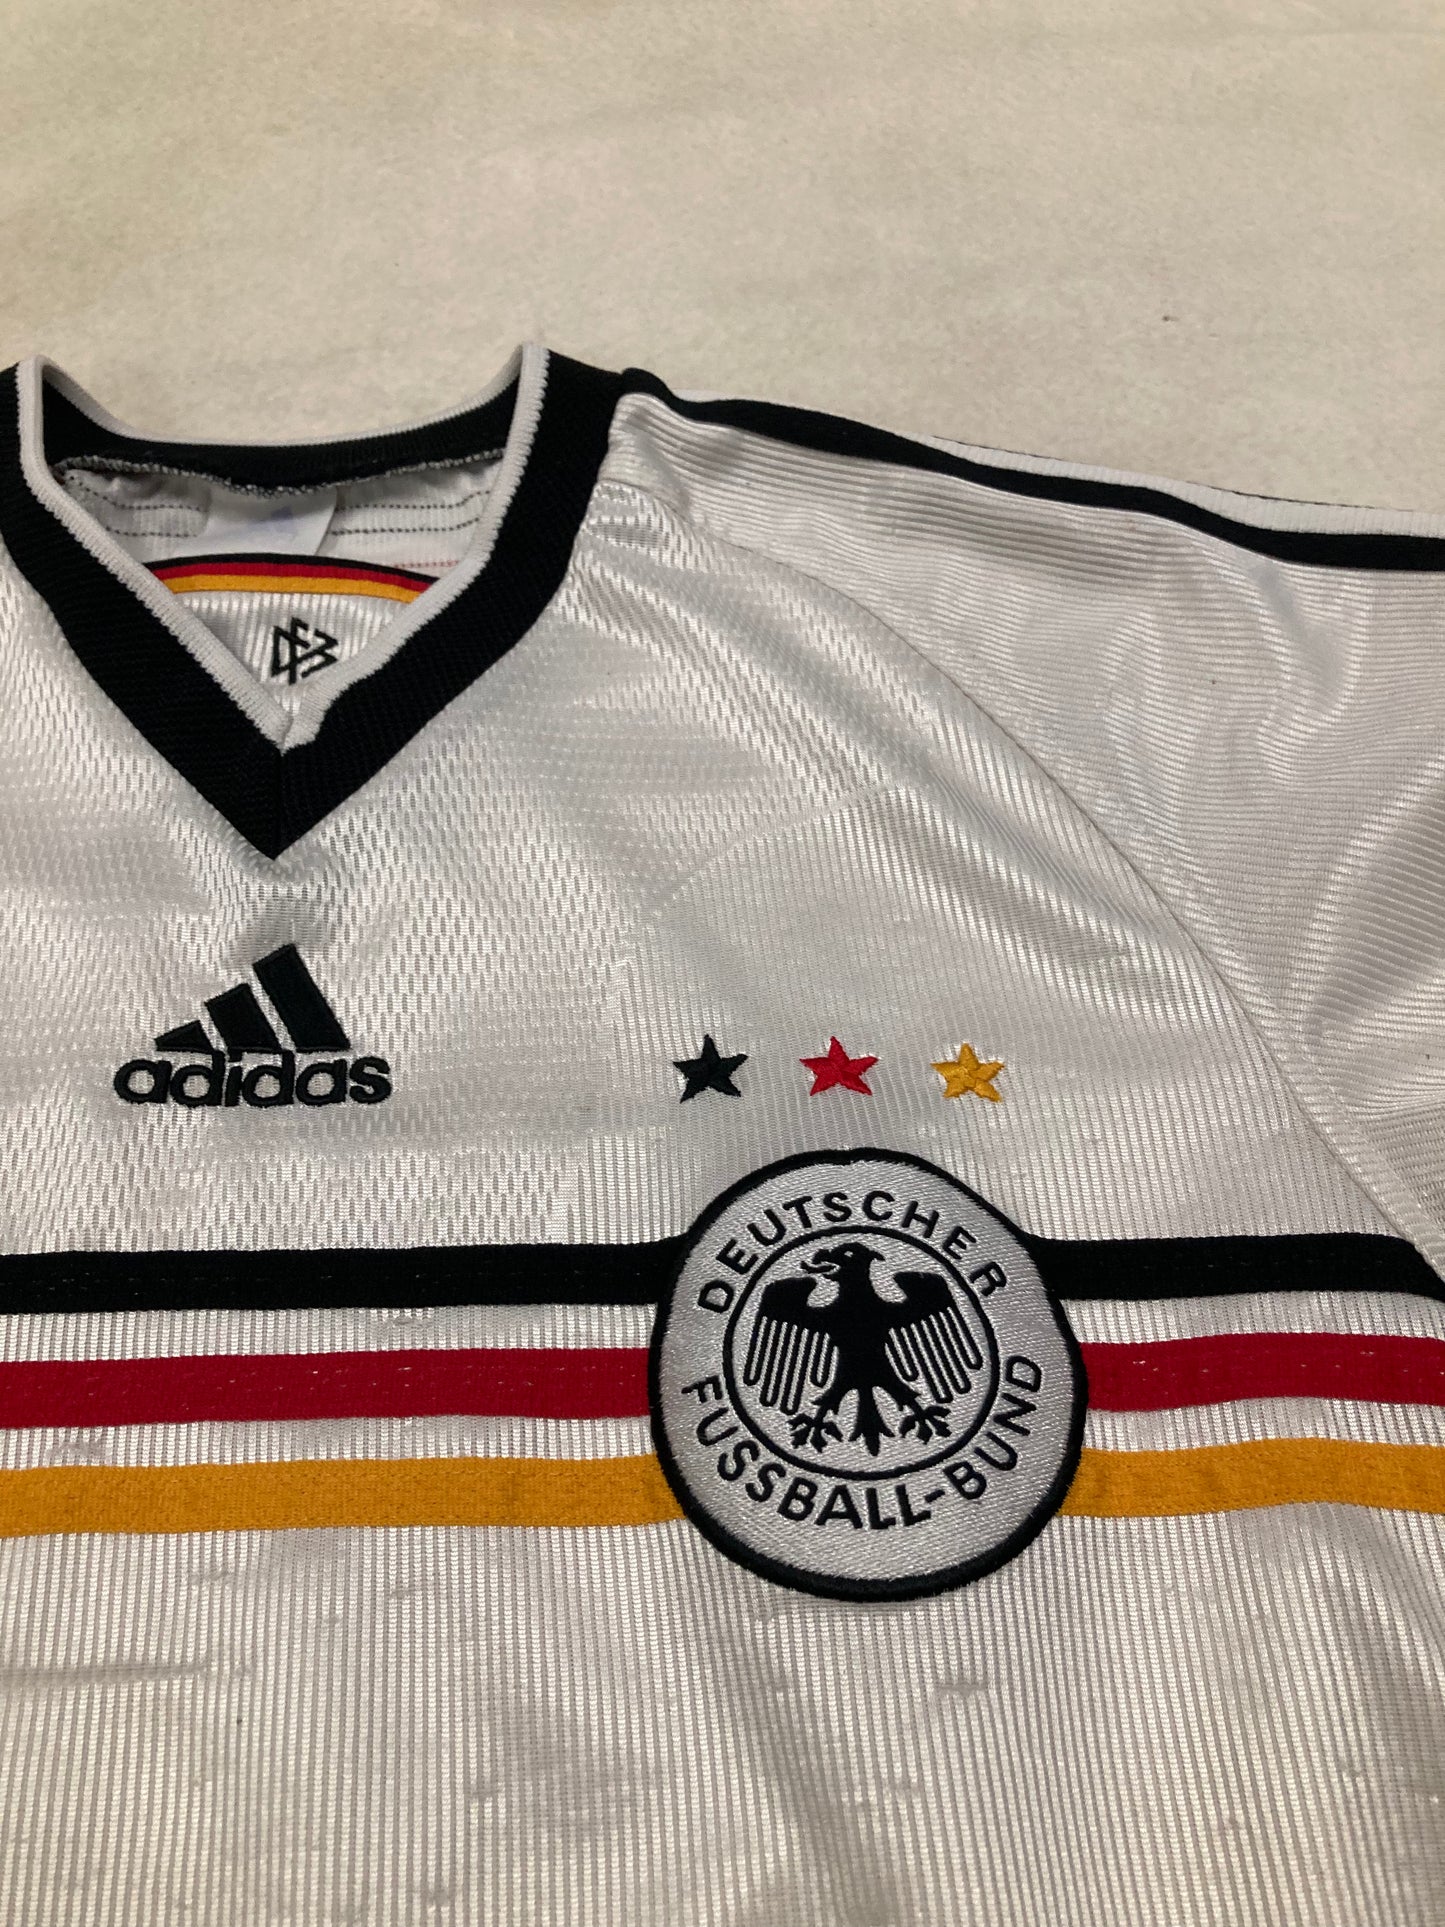 Camiseta Adidas Alemania World Cup 1998 Vintage - M